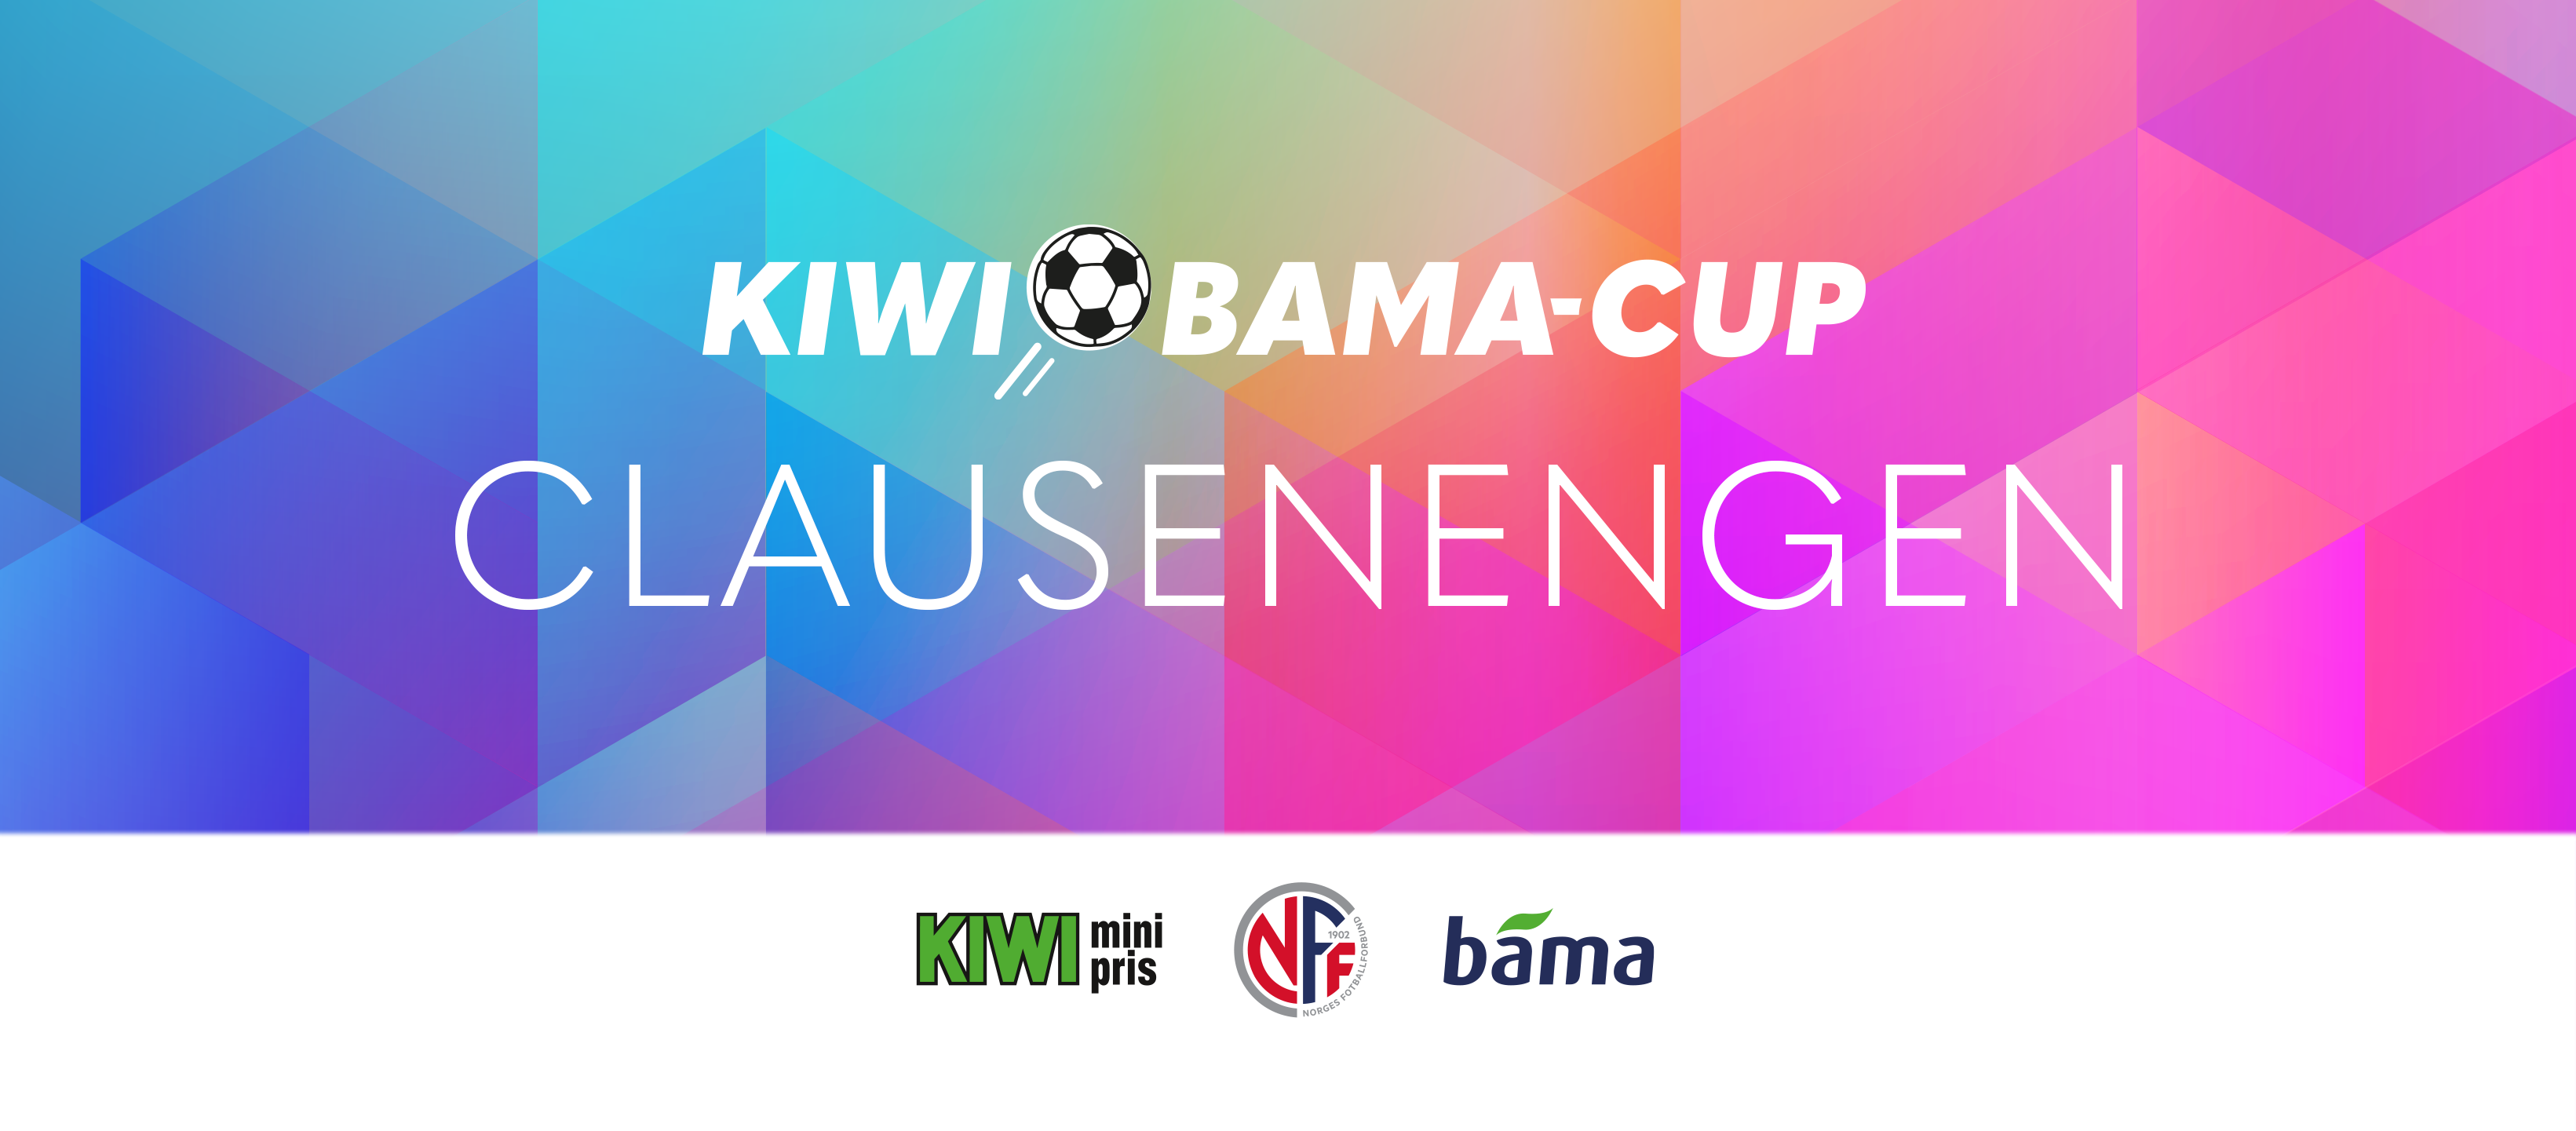 FB-BANNER KIWI-BAMA-CUP - CLAUSENENGEN_.png